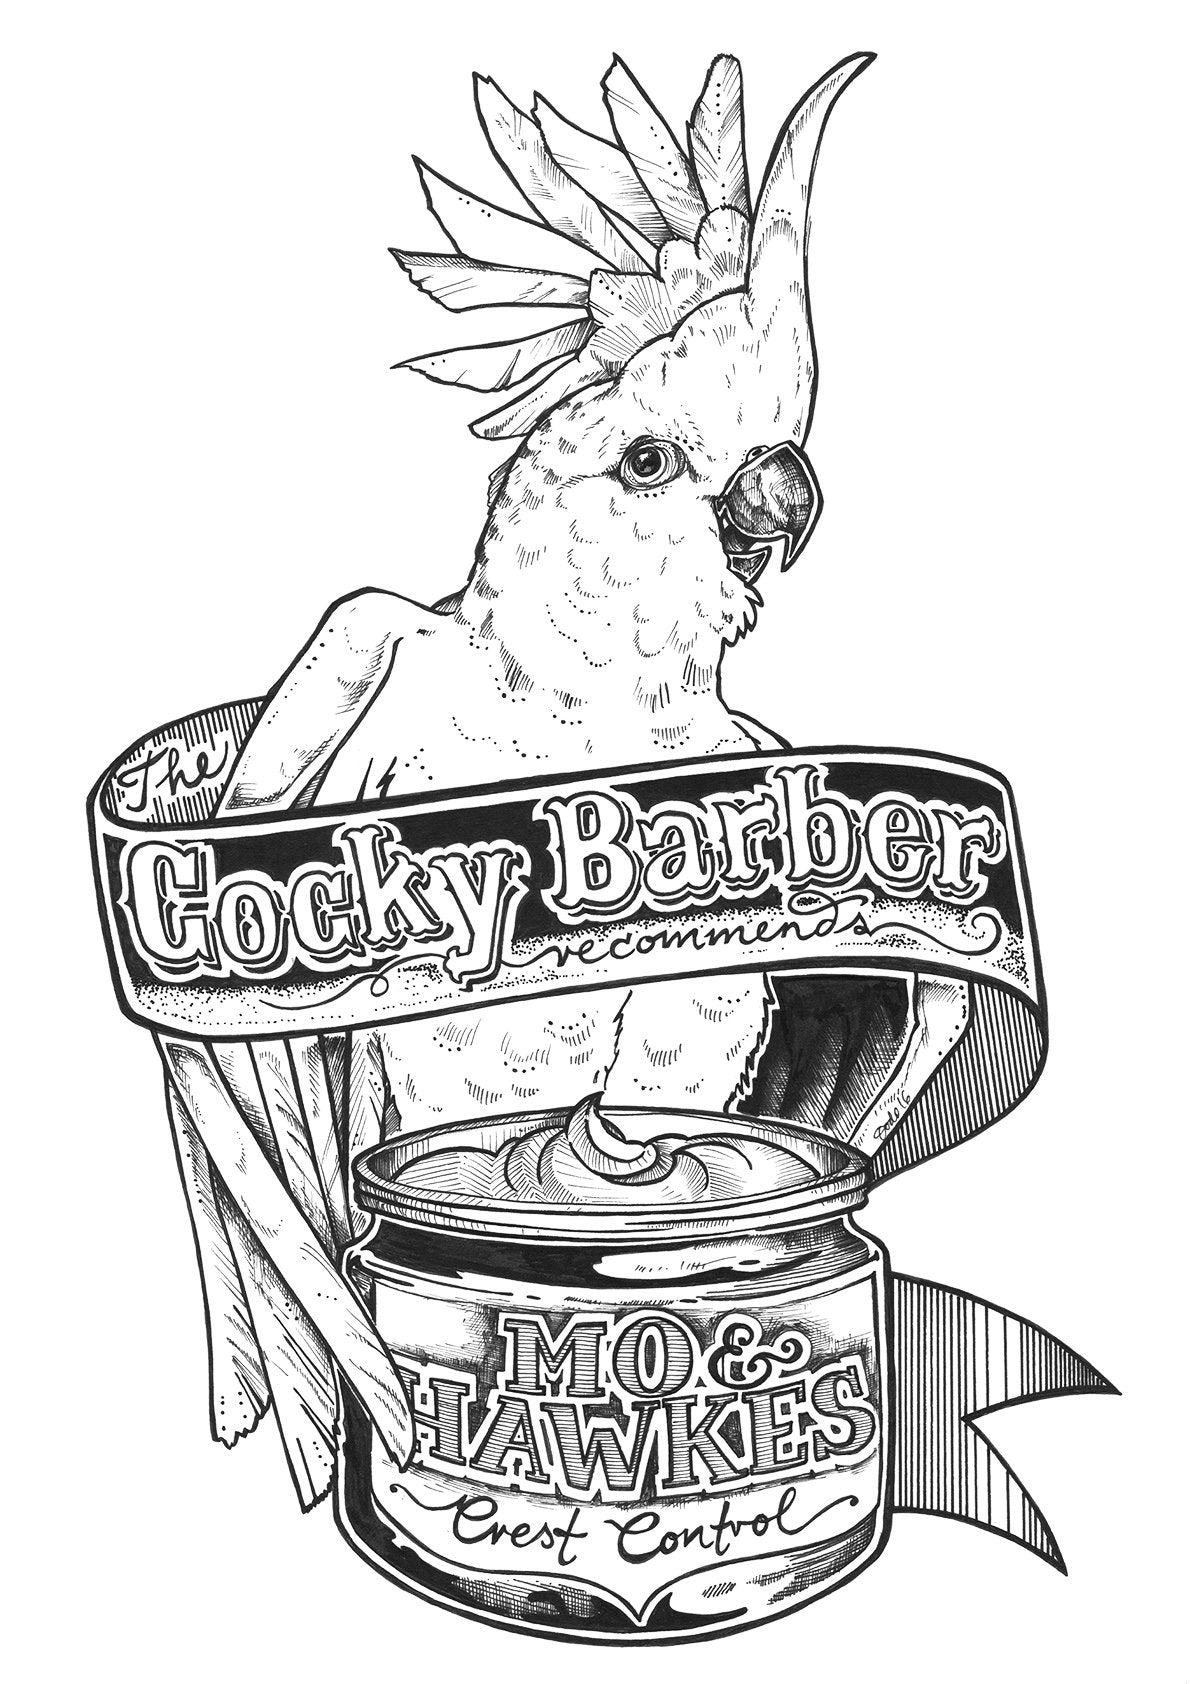 Cocky Barber A3 Print